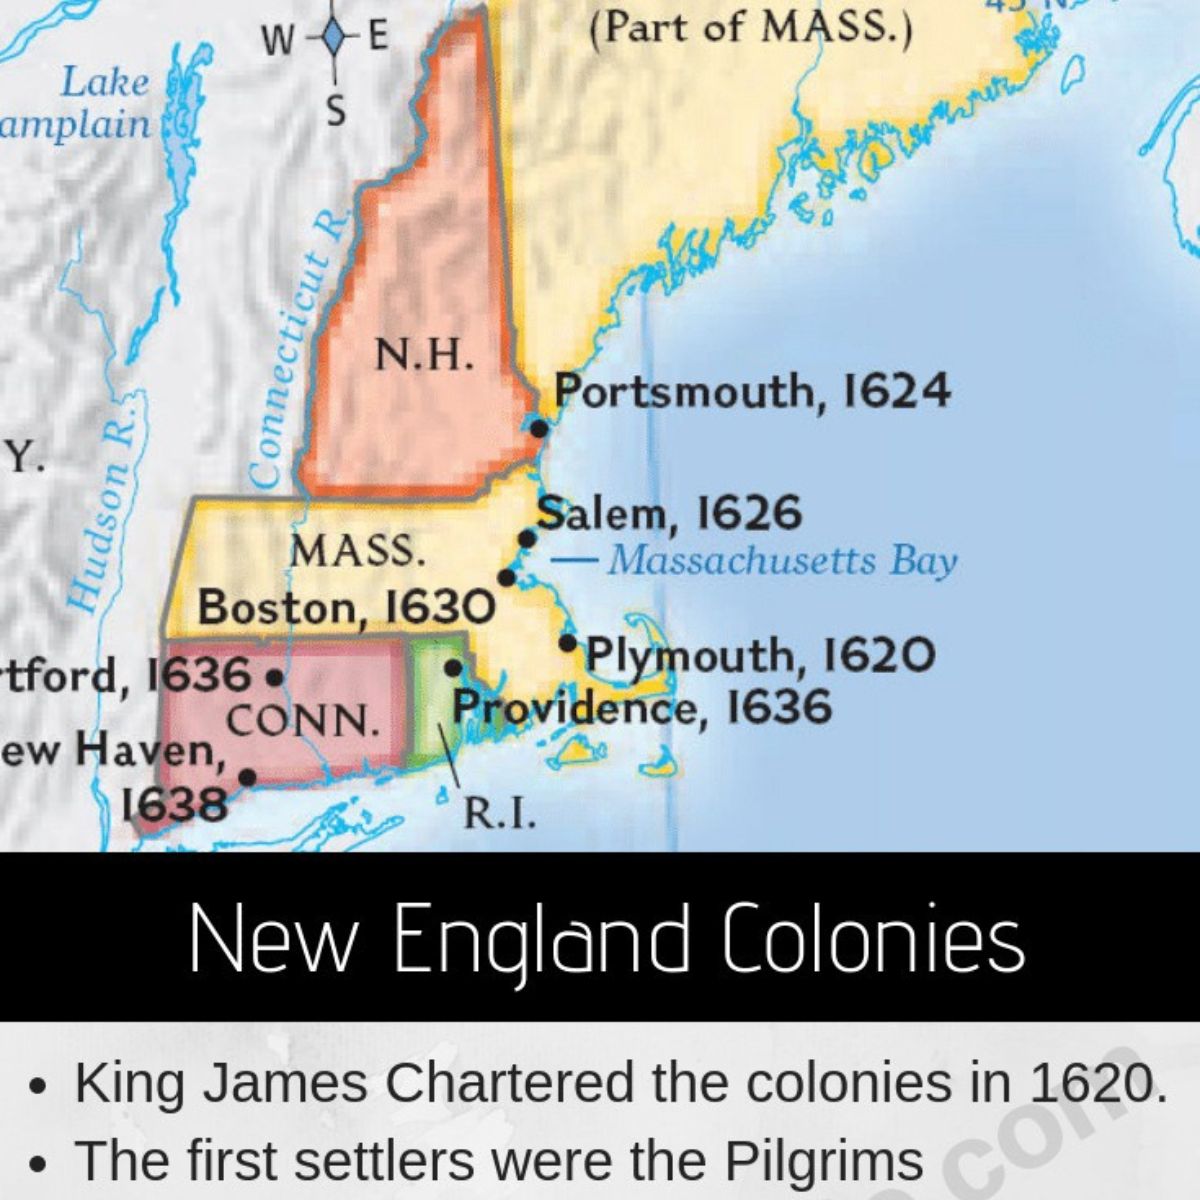 https://thehistoryjunkie.com/wp-content/uploads/2011/08/New-England-colonies.jpg